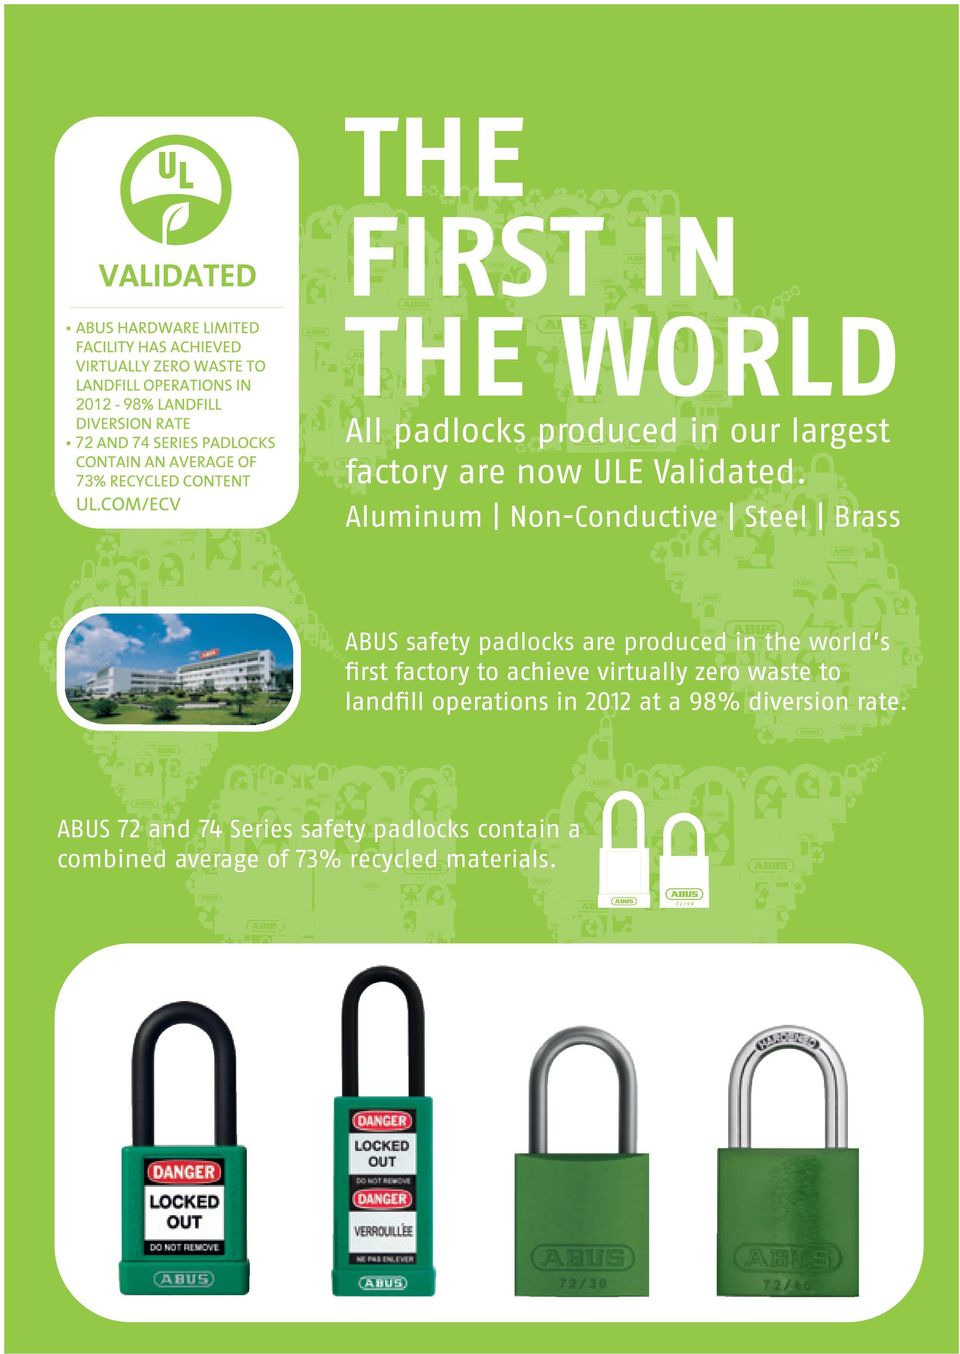 Aluminum Non-Conductive Steel Brass ABUS safety padlocks are